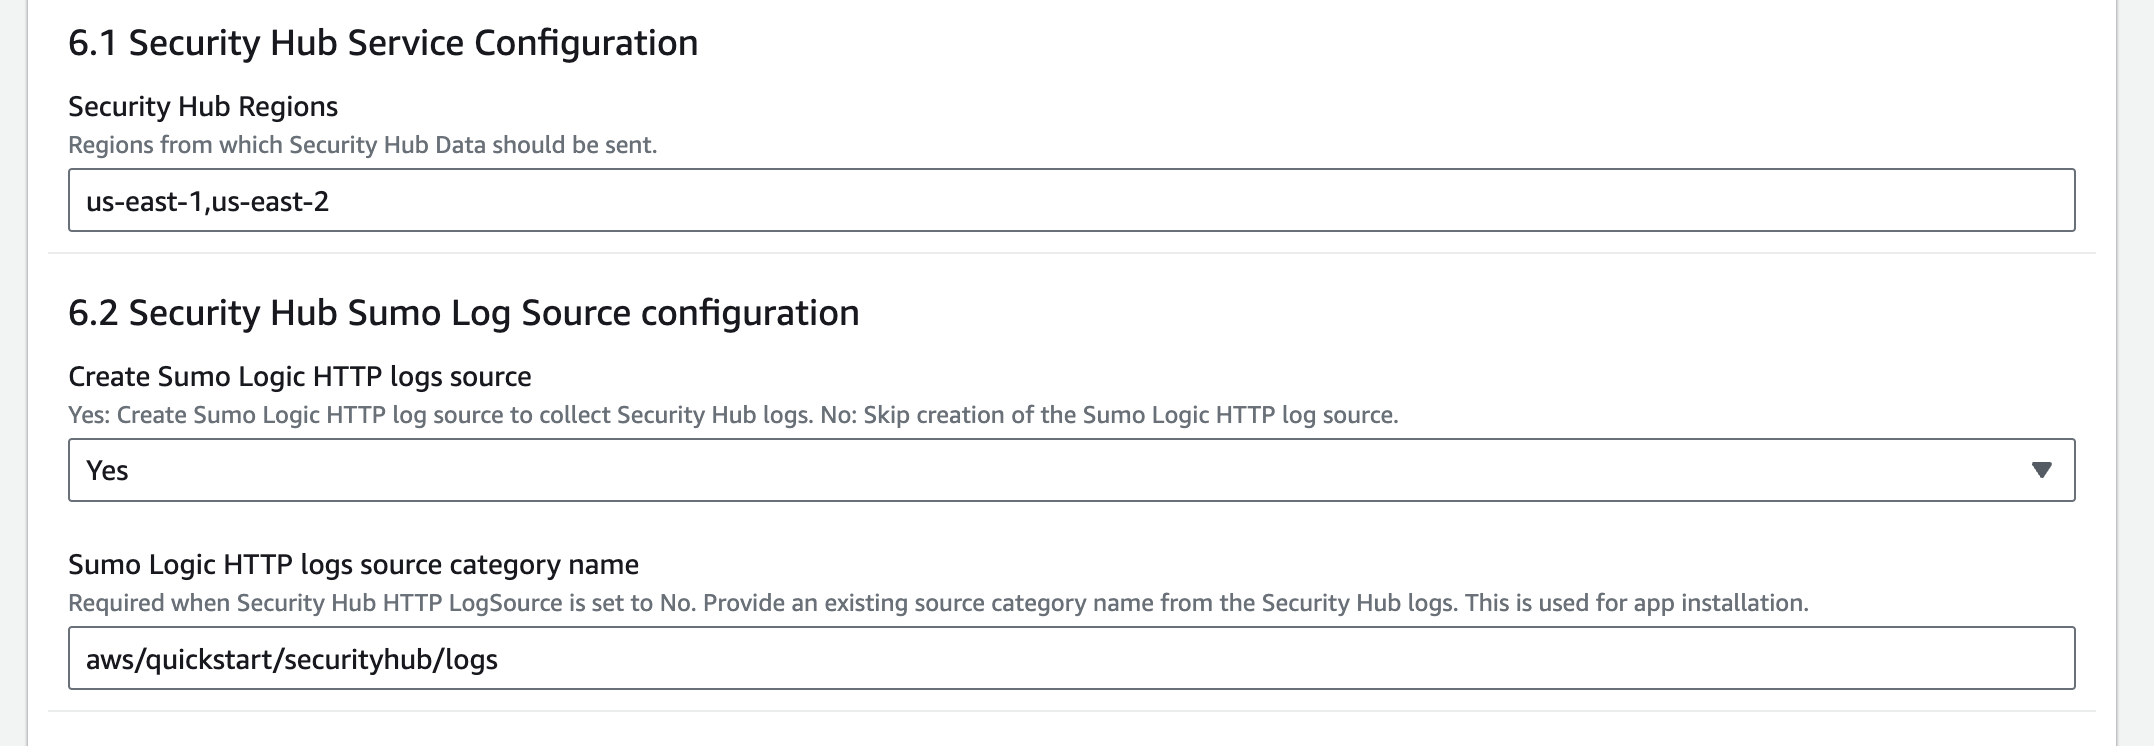 Security Hub configuration